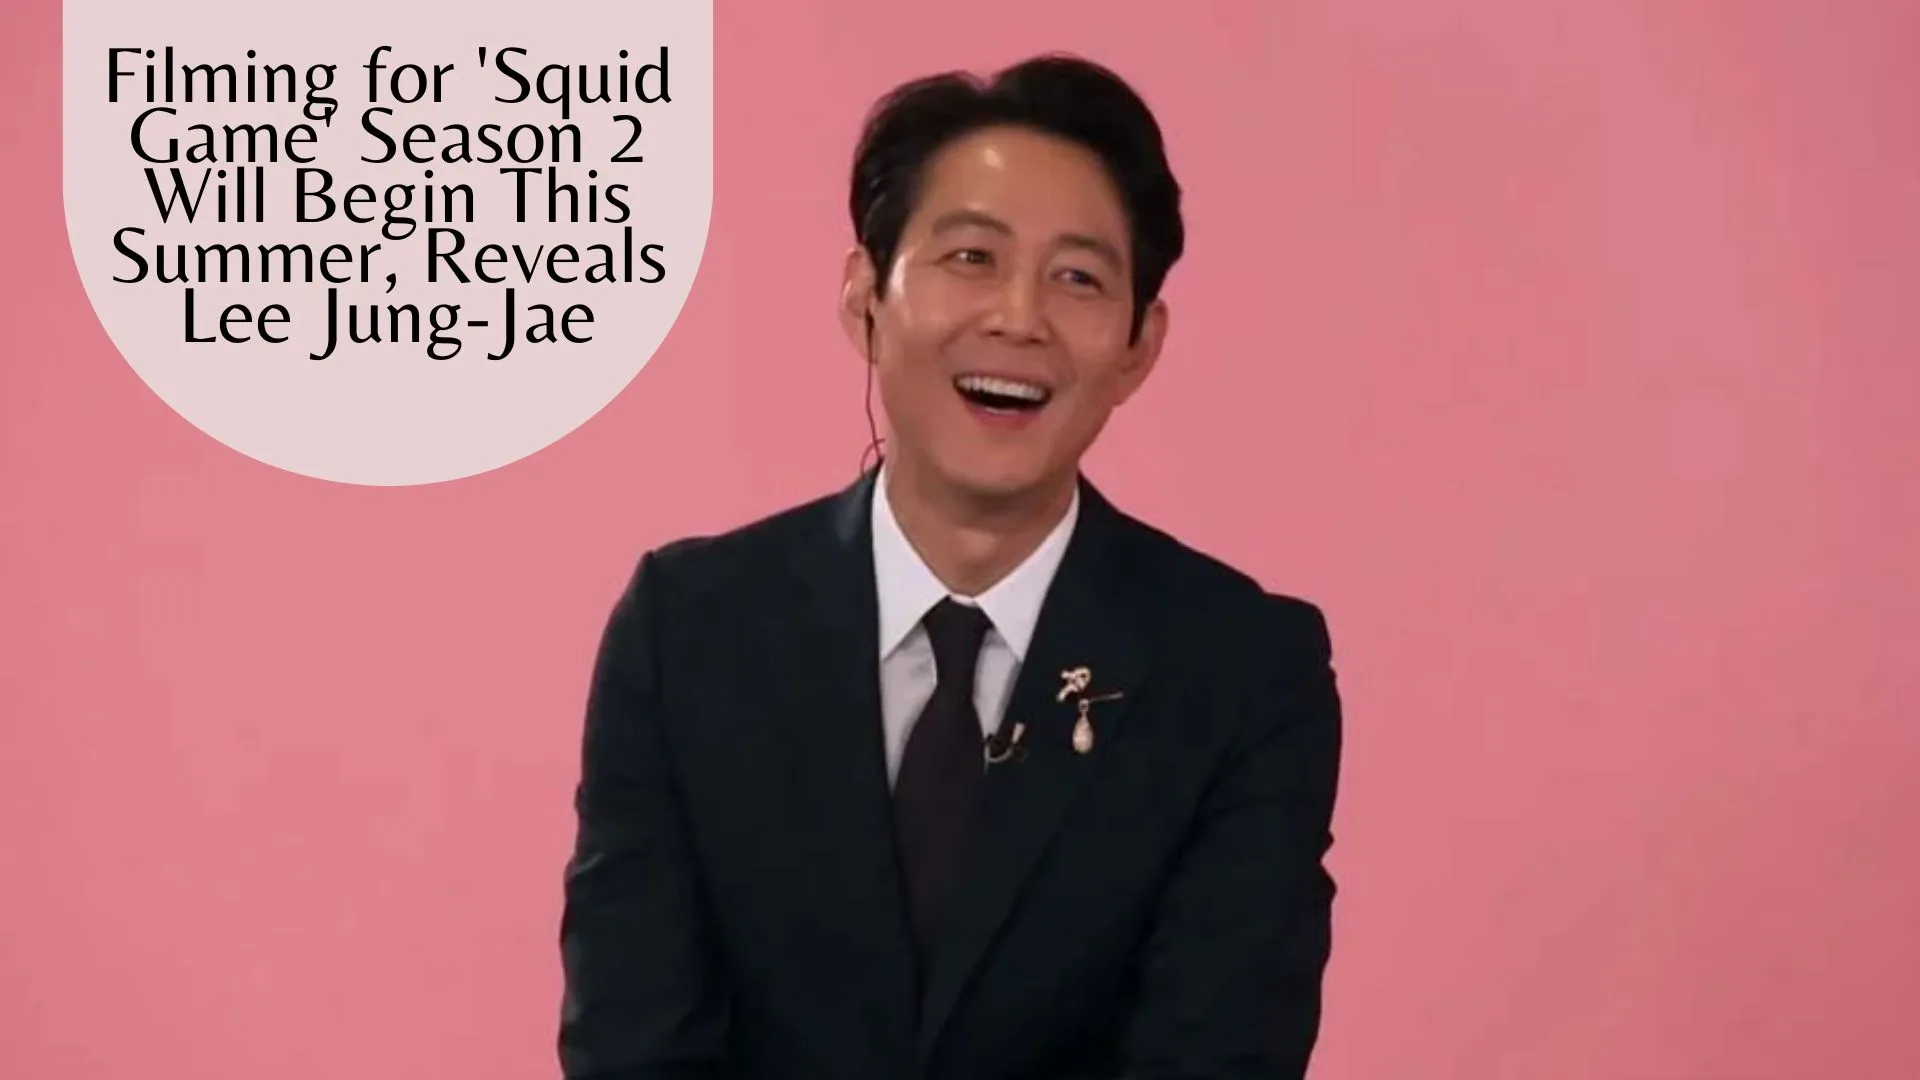 Filming for 'Squid Game' Season 2 Will Begin This Summer, Reveals Lee Jung-Jae (Image credit: mustsharenews)